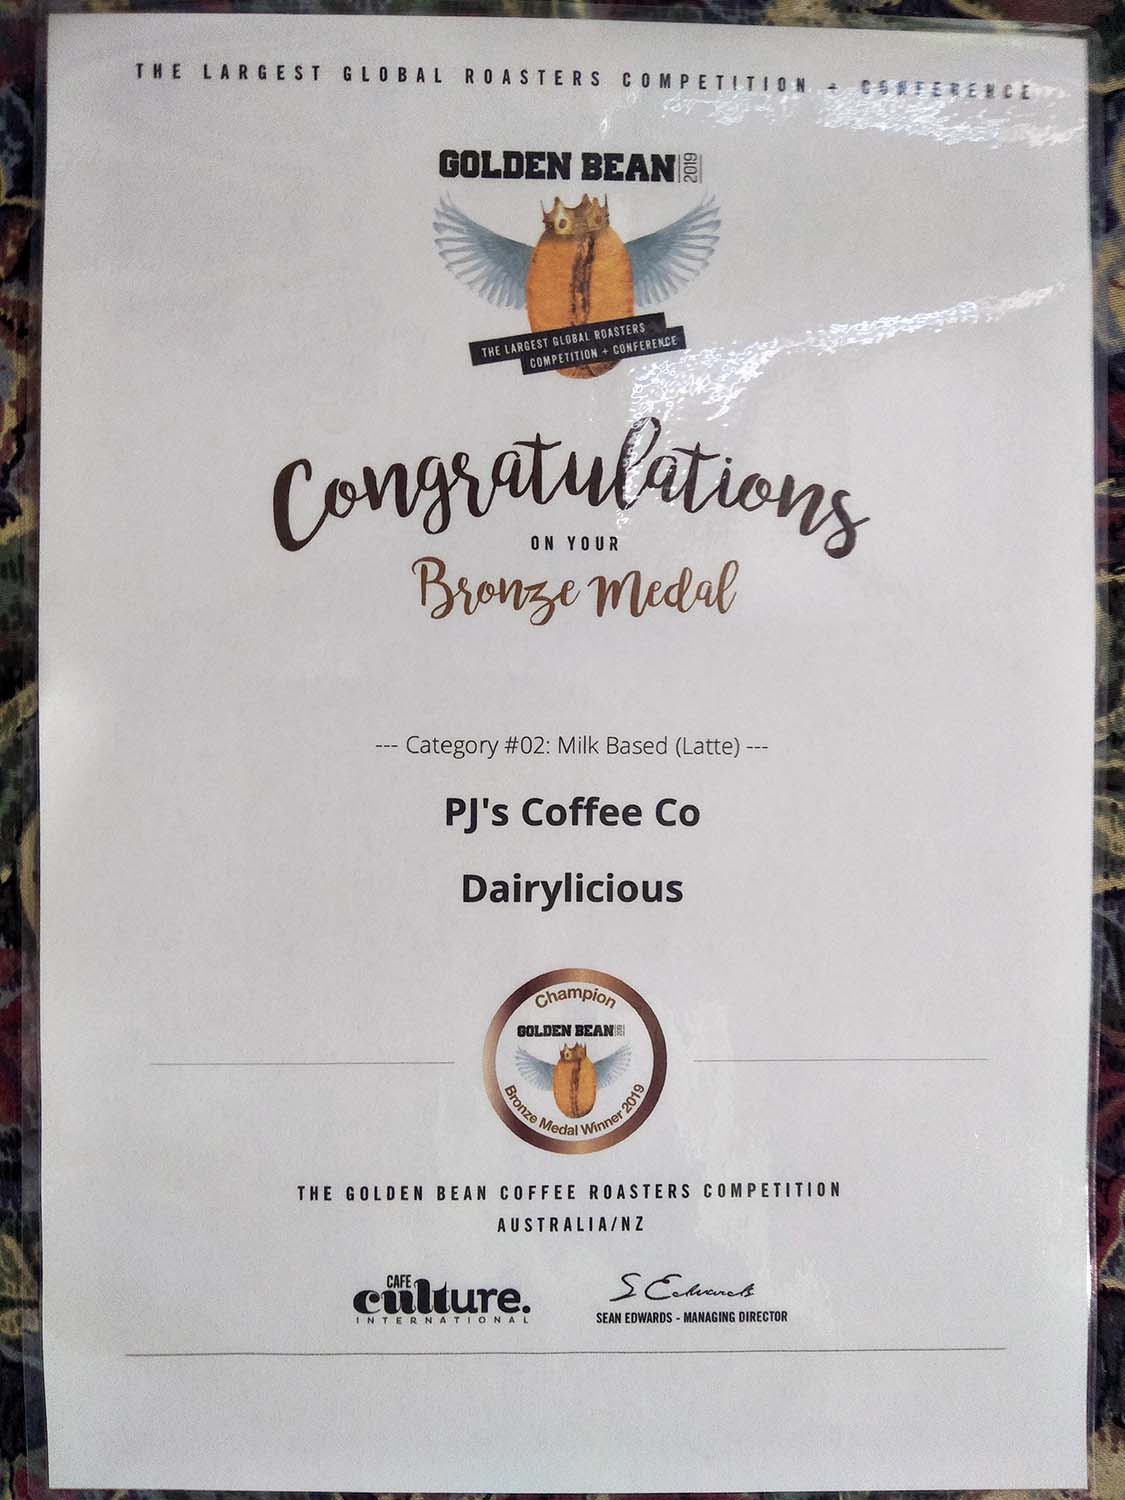 Dairylicious Farm Fudge - Golden Bean Awards 2020 Certificate